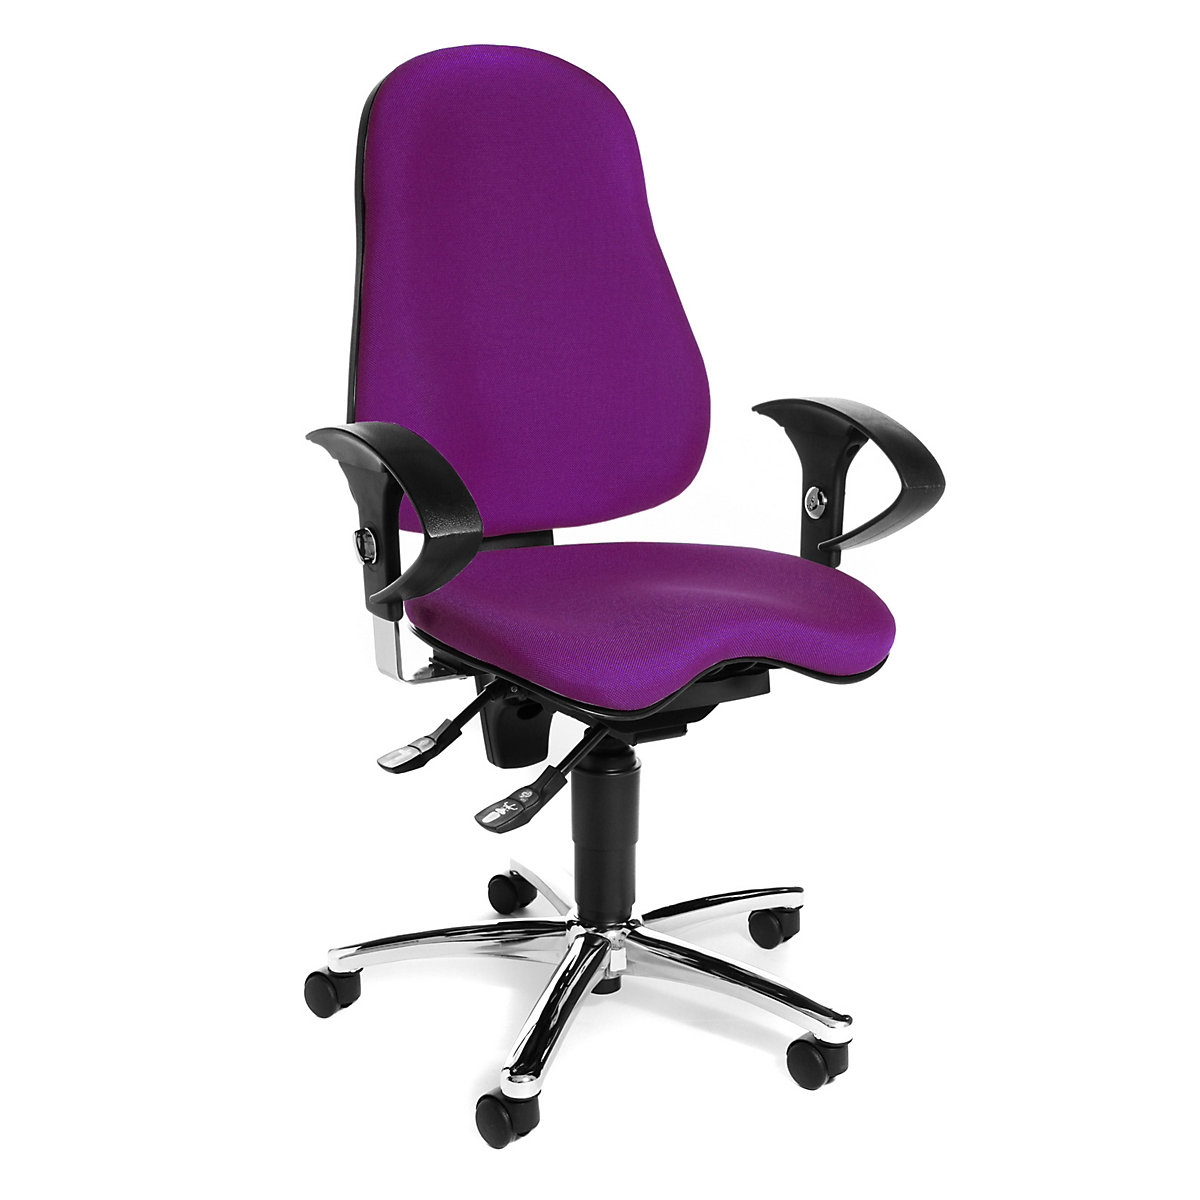 SITNESS 10 office swivel chair – Topstar